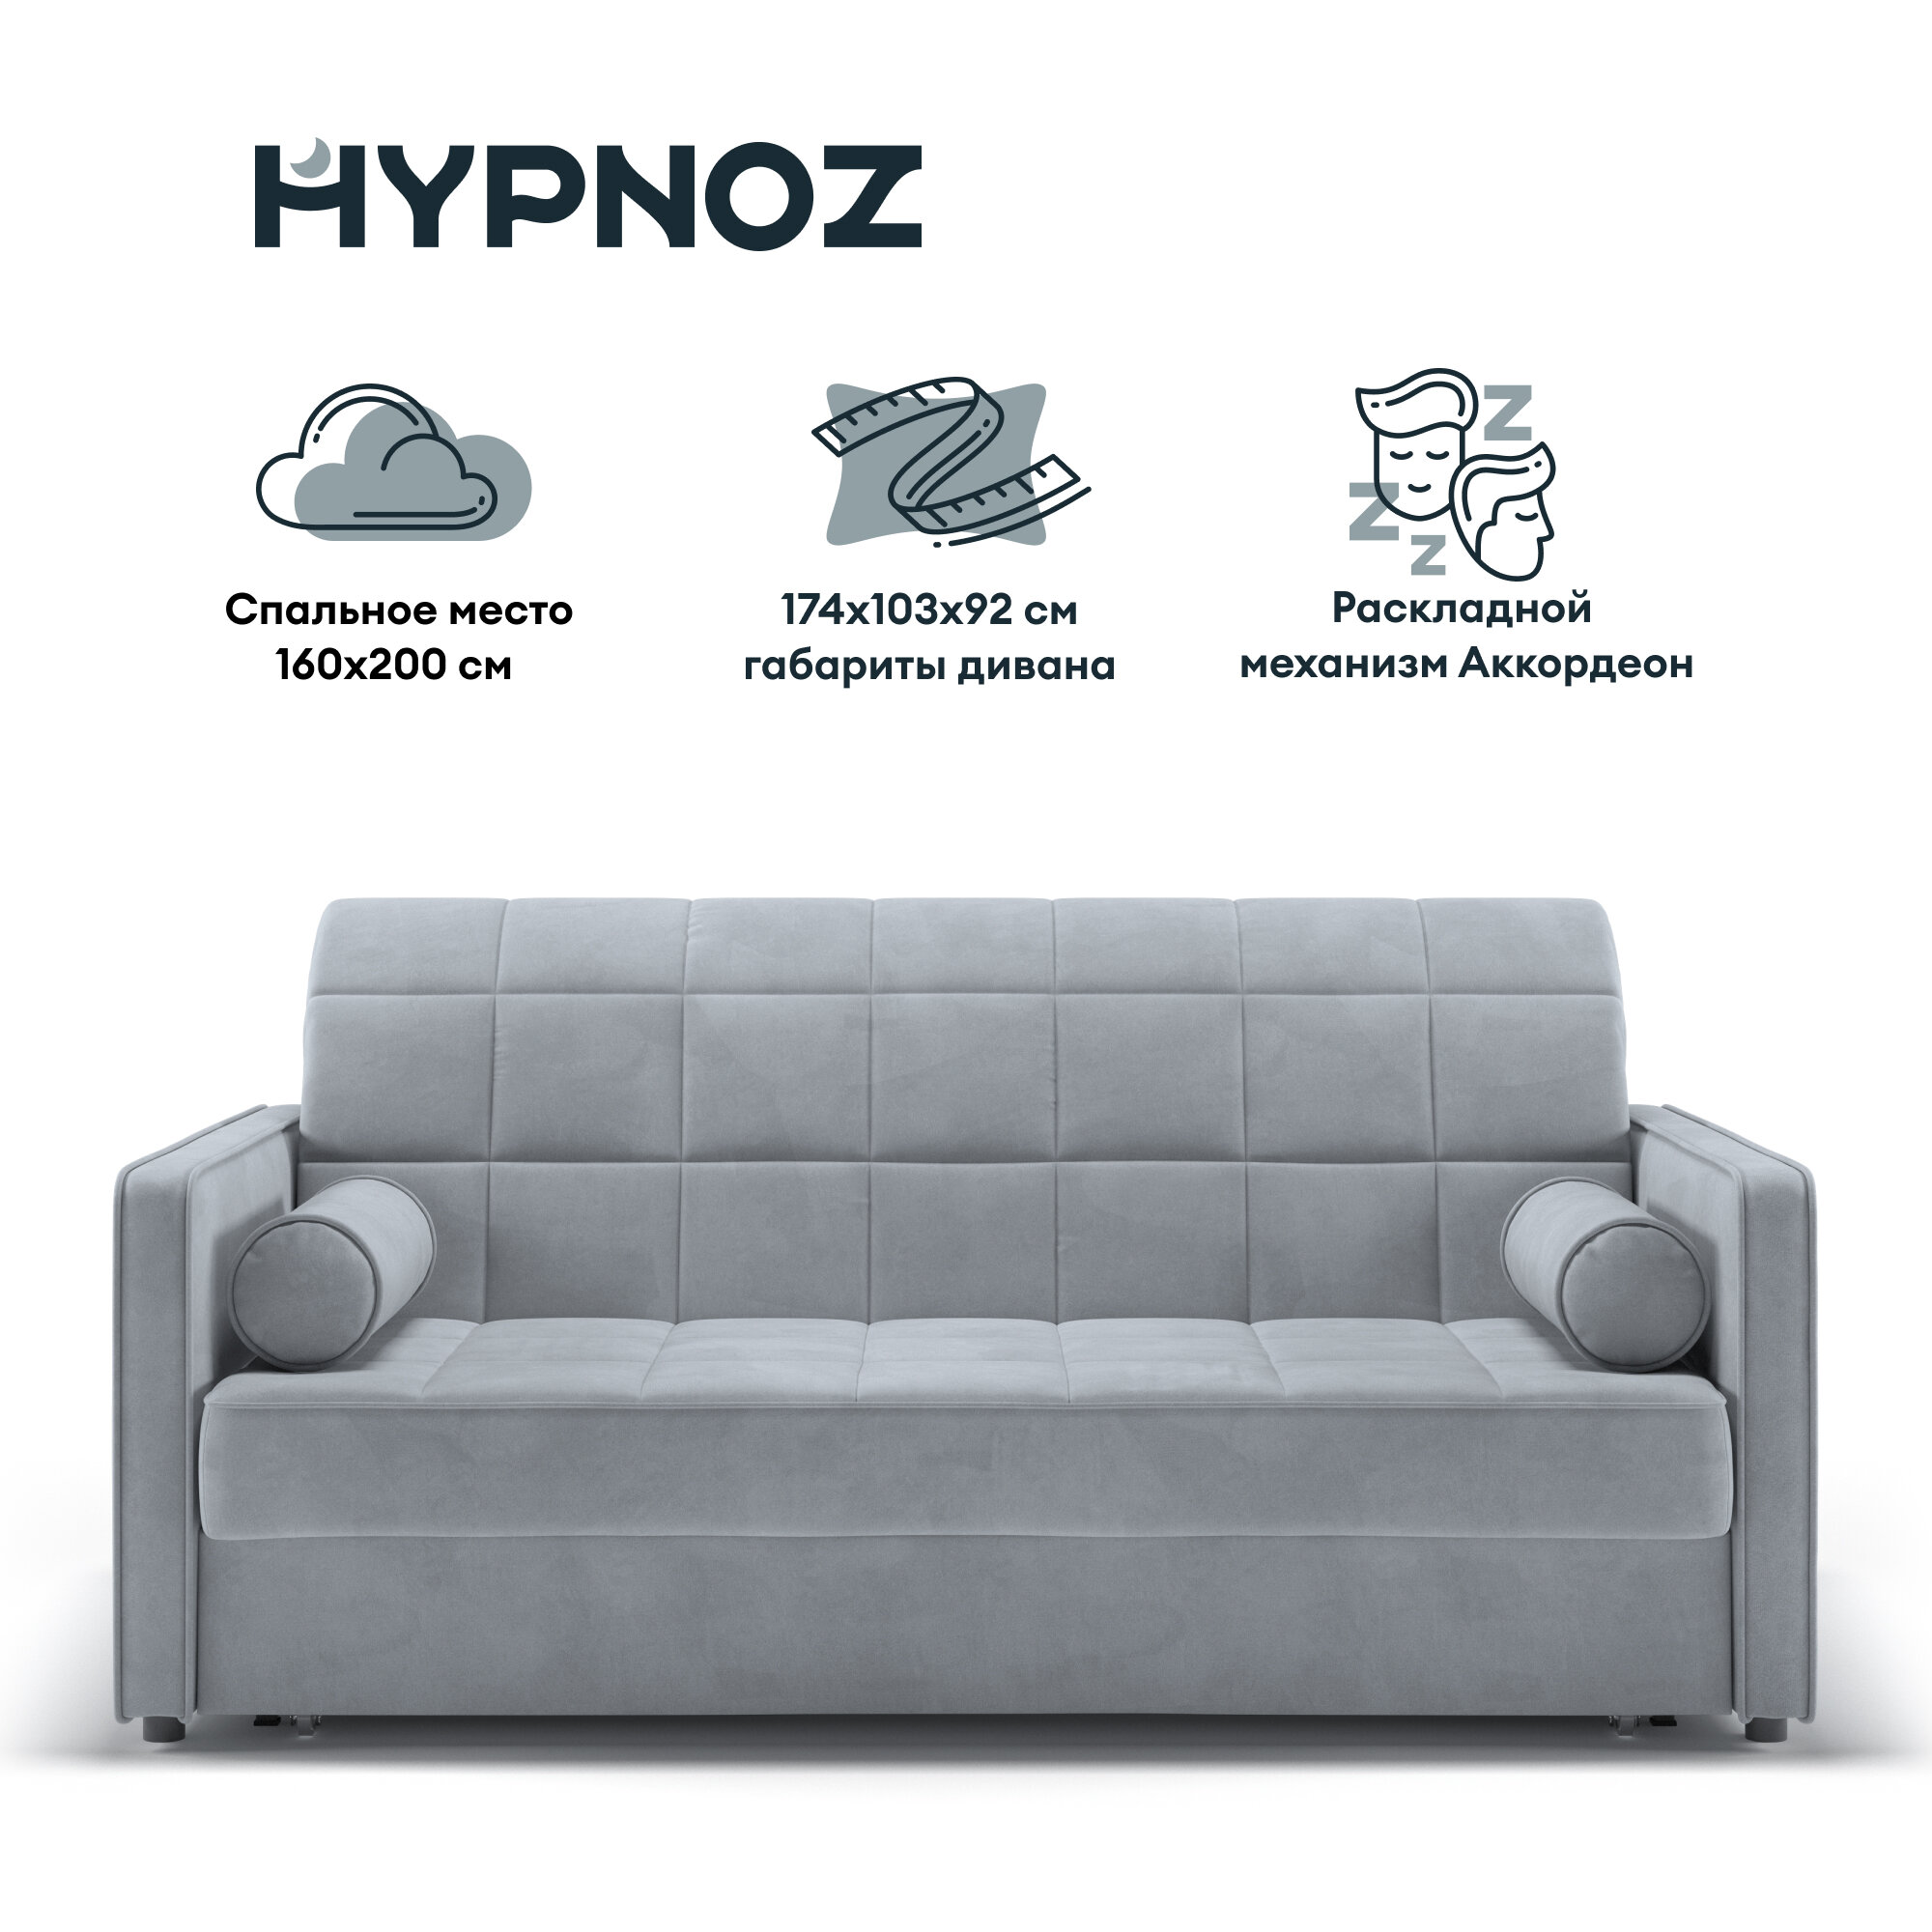 Диван-кровать, Прямой диван HYPNOZ Palma, механизм Аккордеон, 174х103х92 см